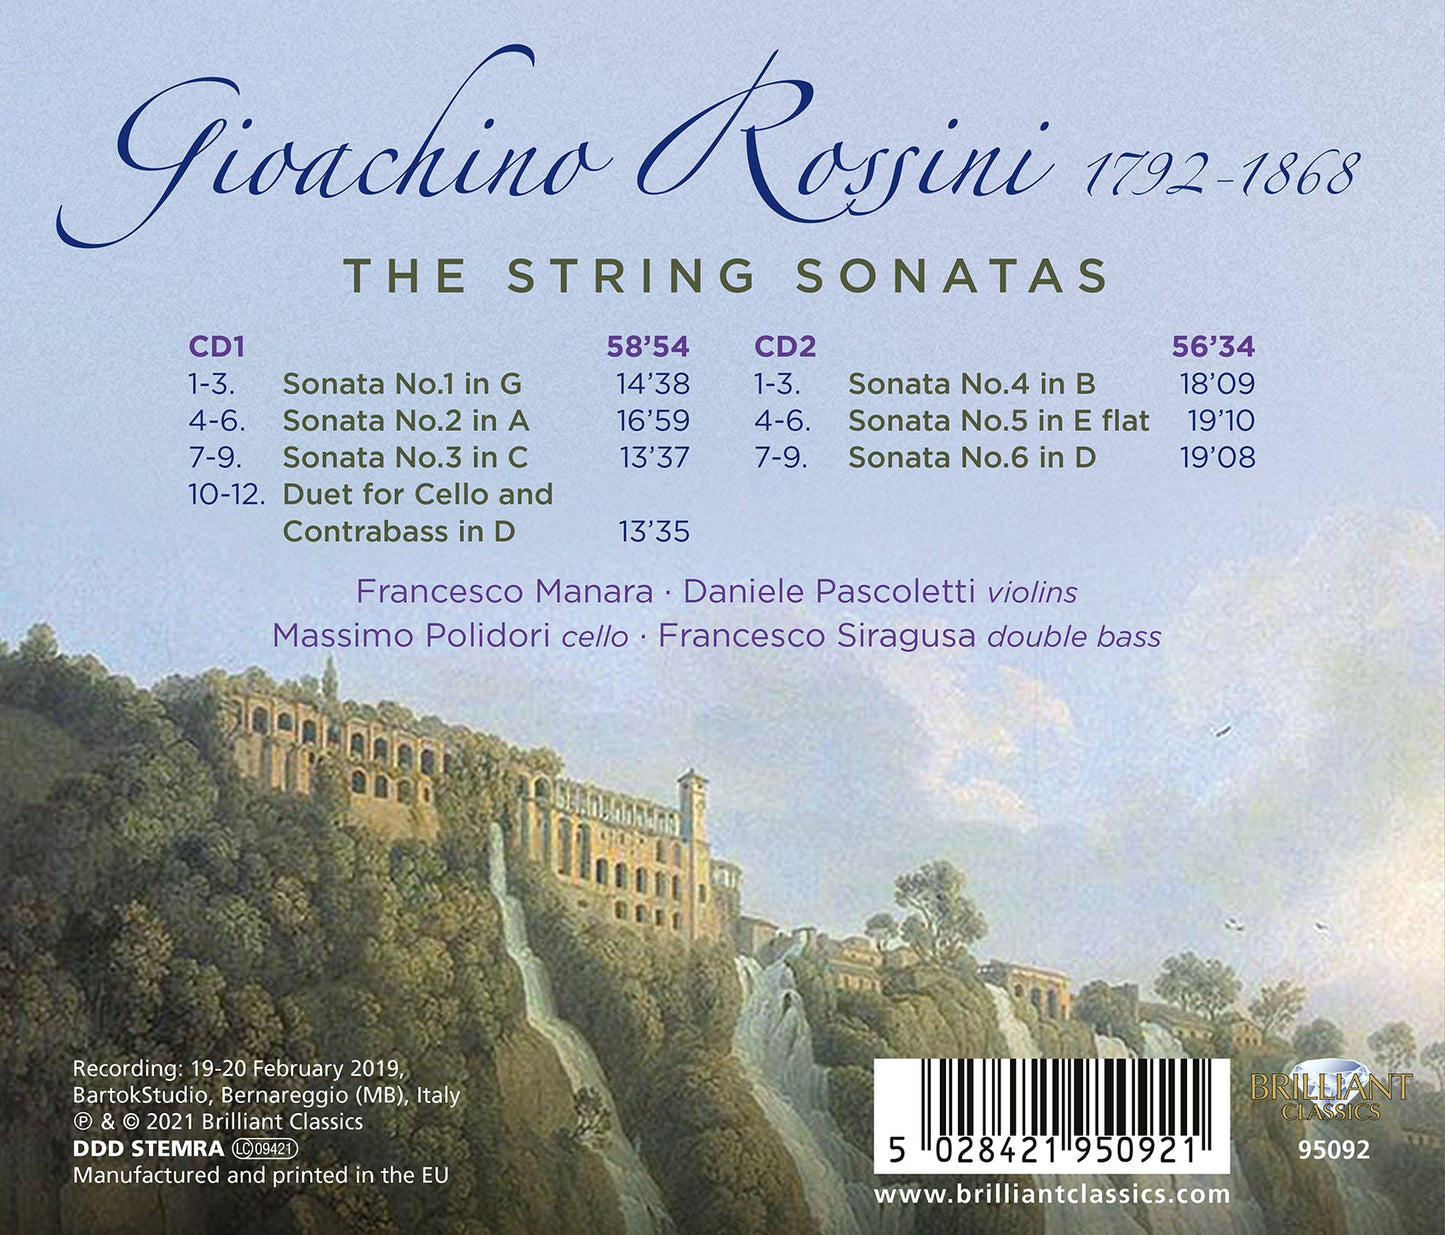 The String Sonatas